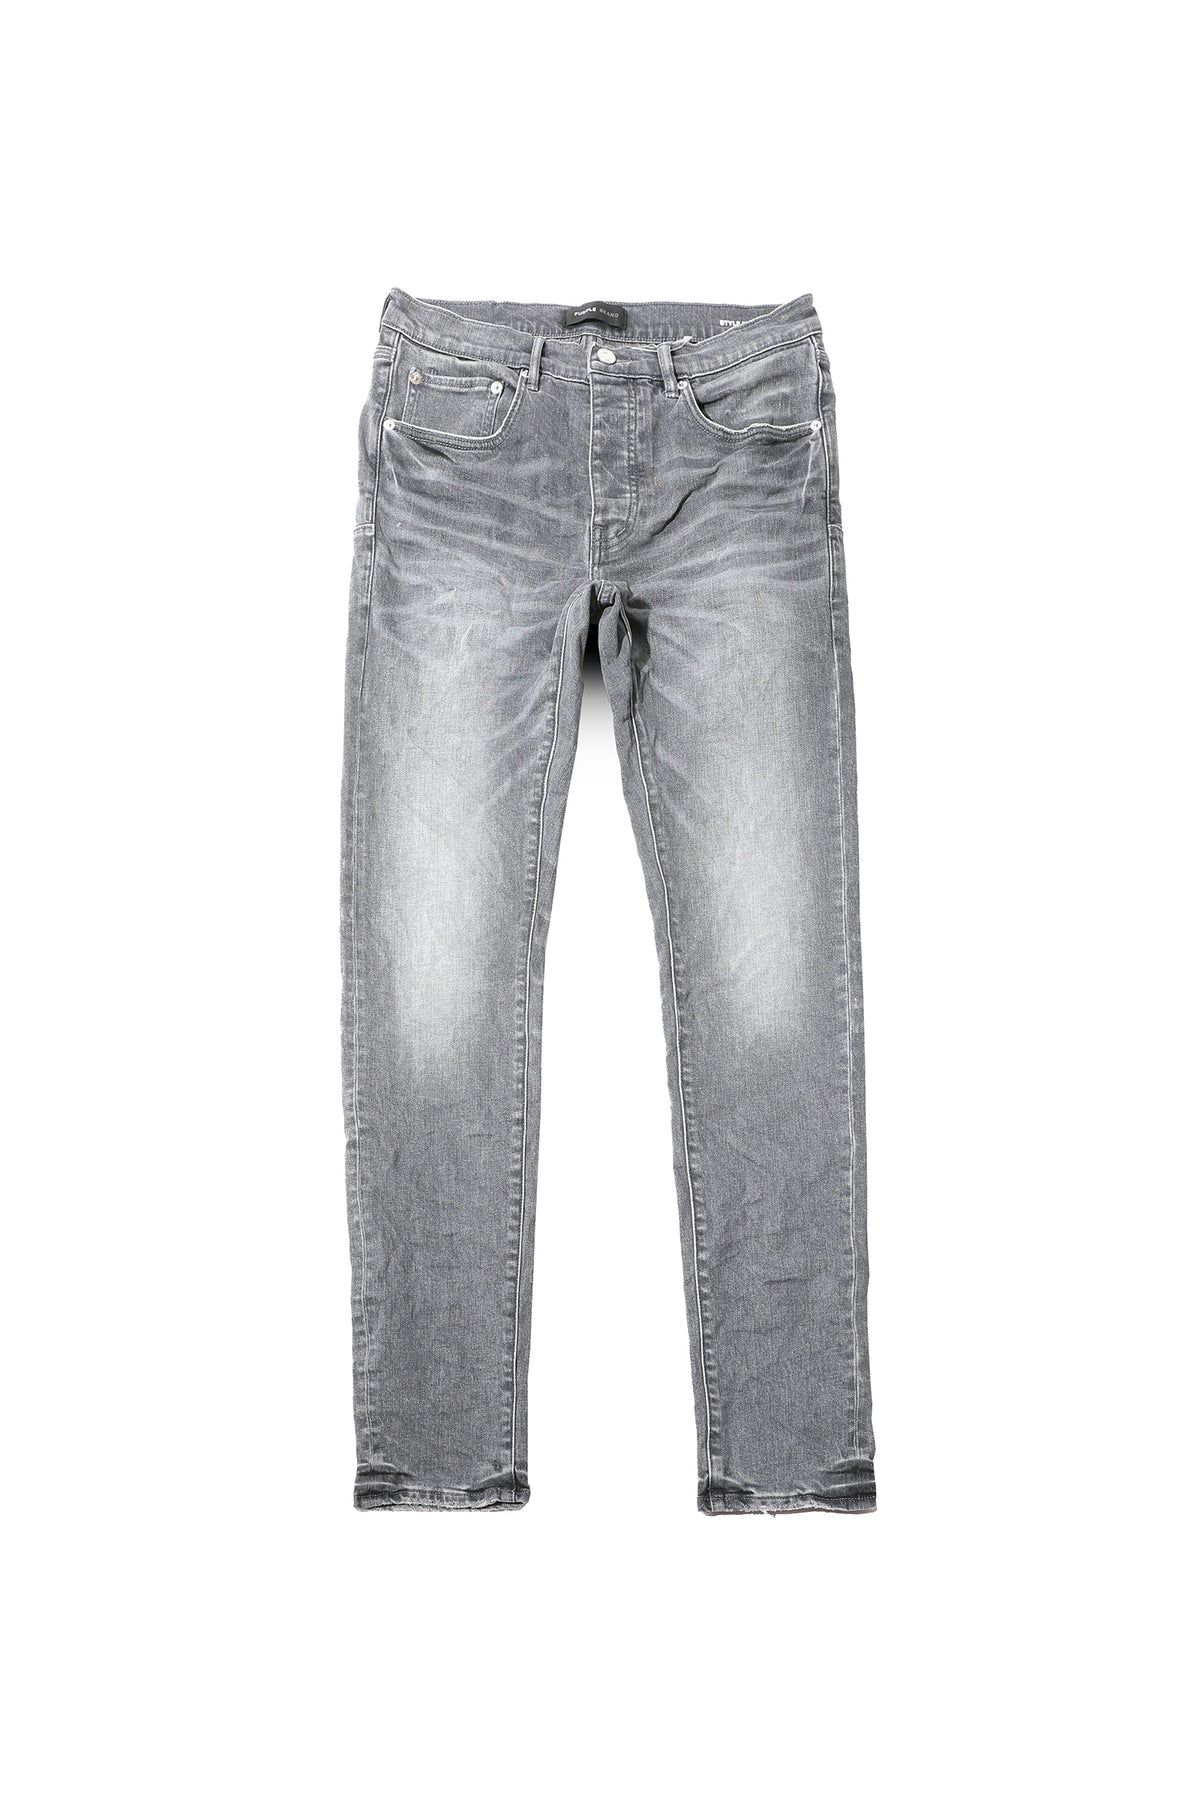 Purple Brand Vintage Slate Jeans - GREY